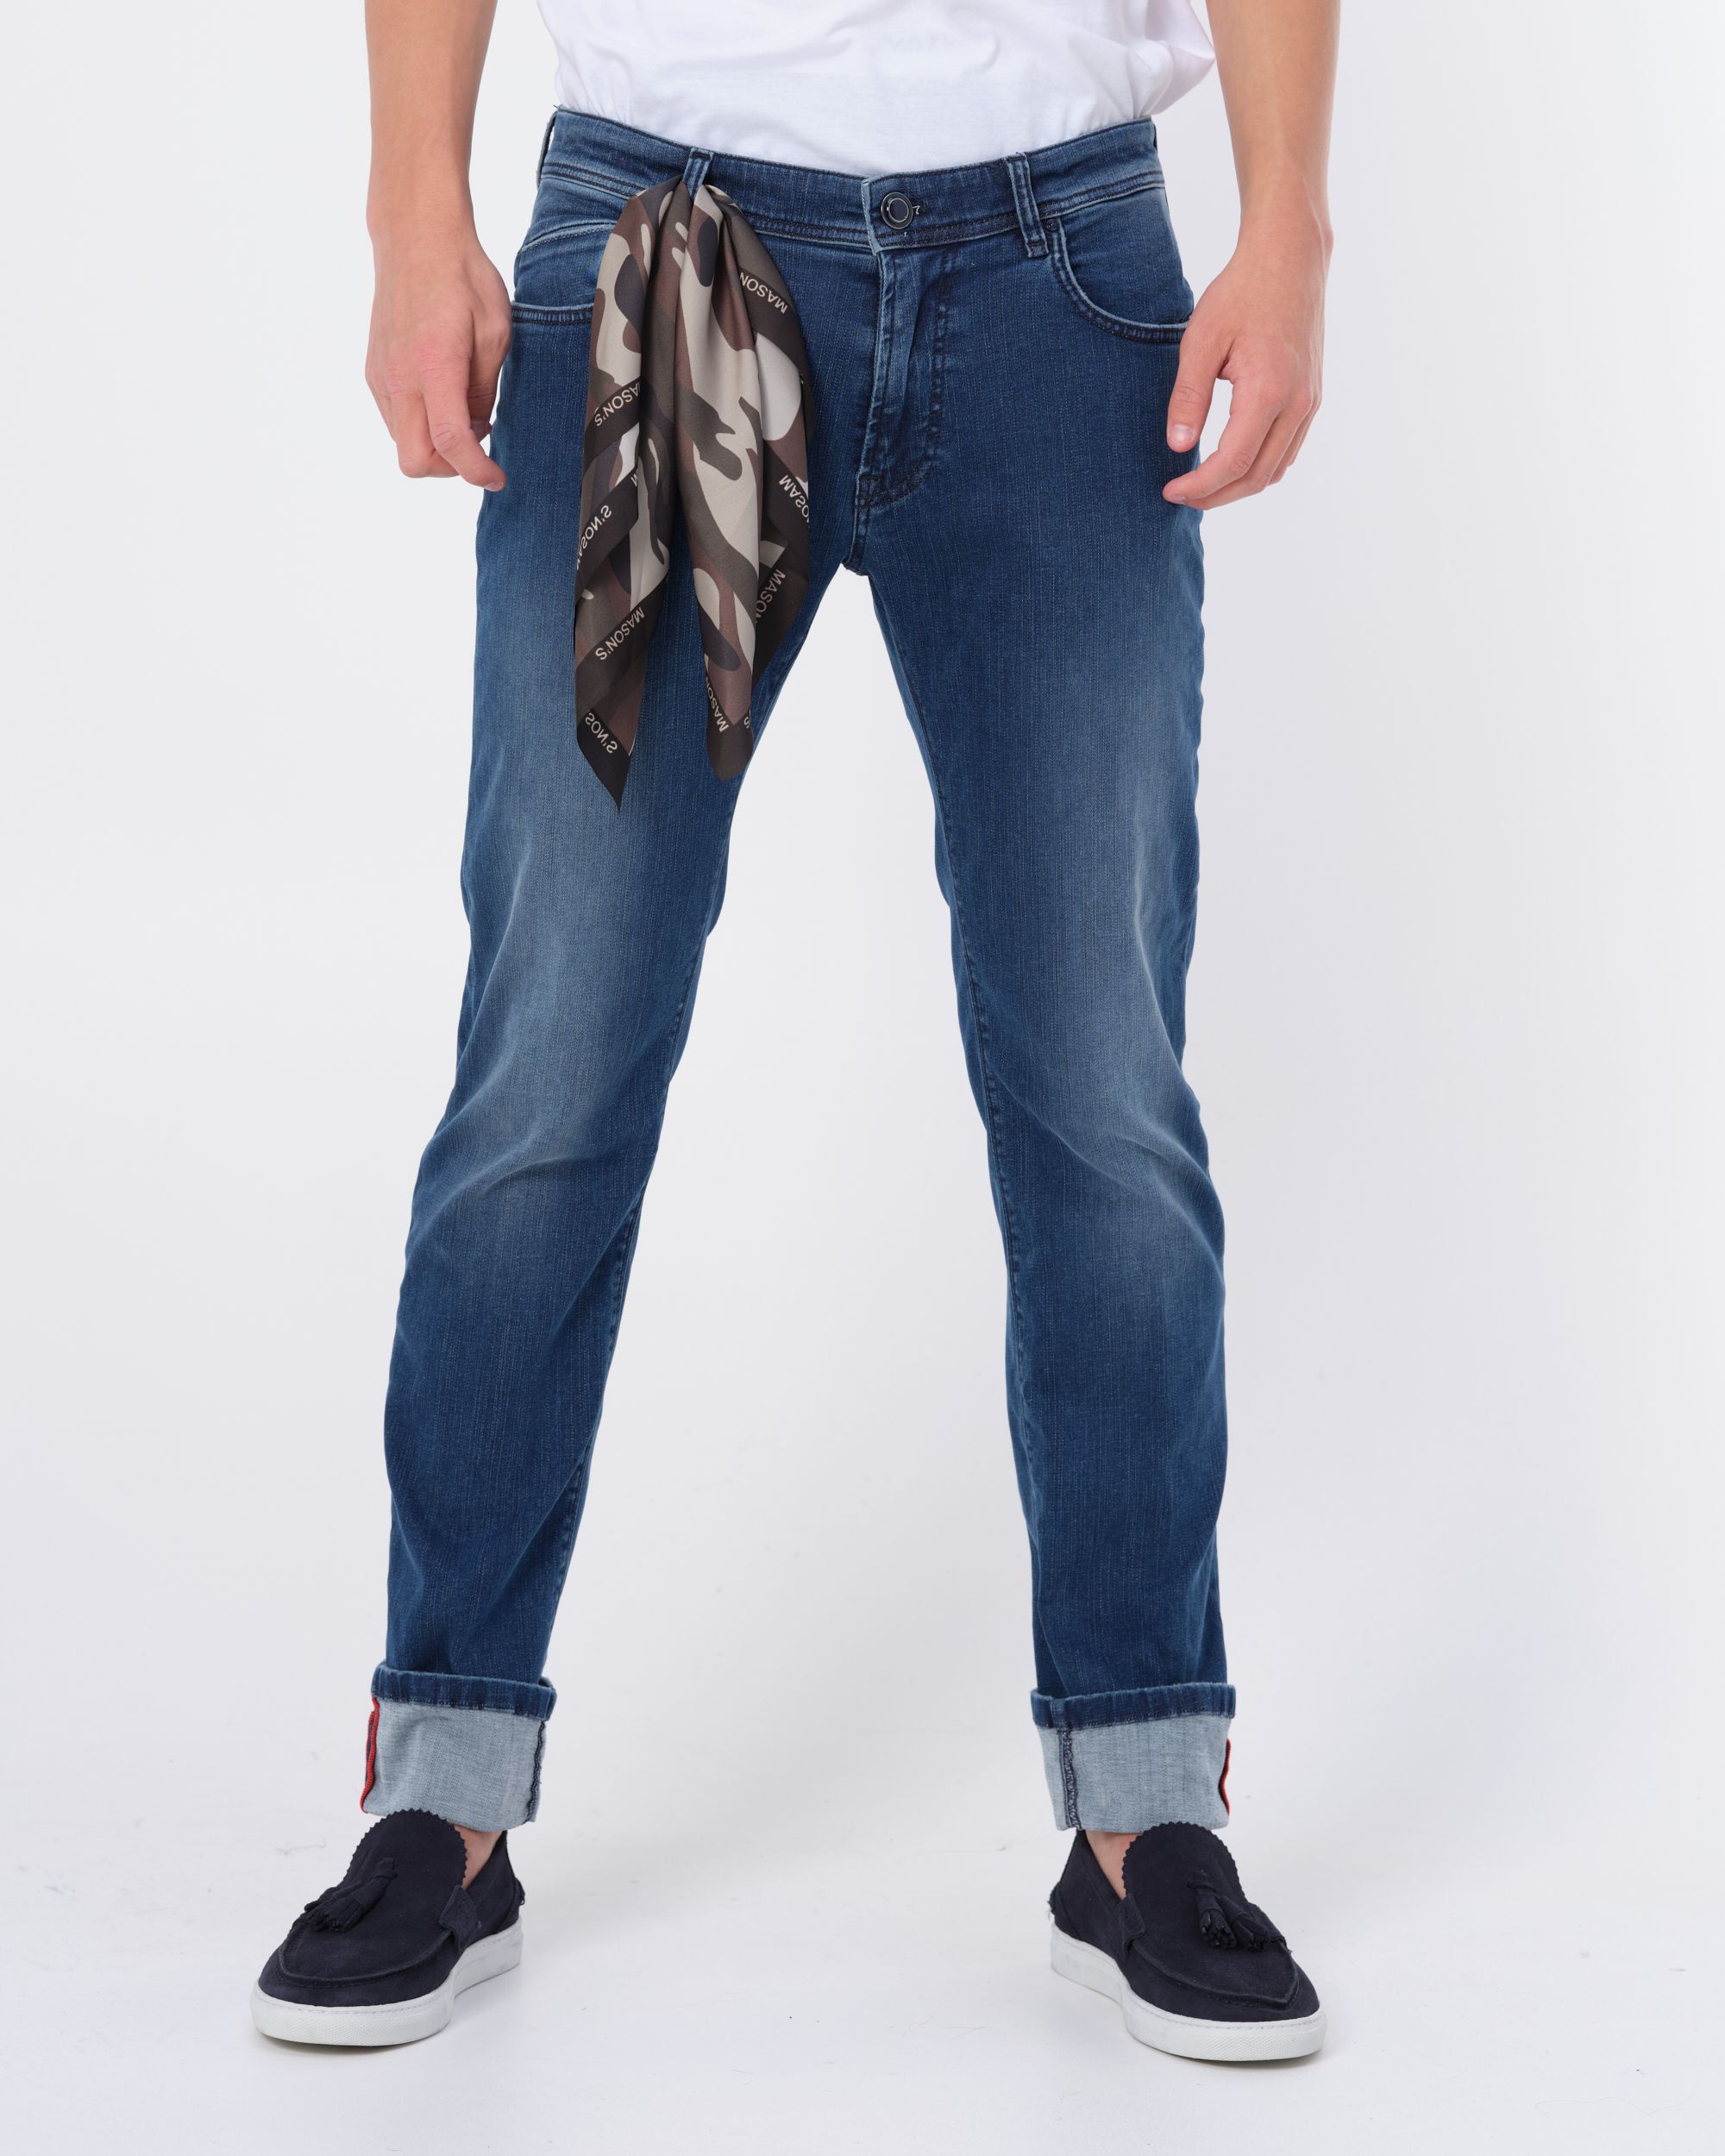 Mason's Jeans | Shop nu - Only for Men